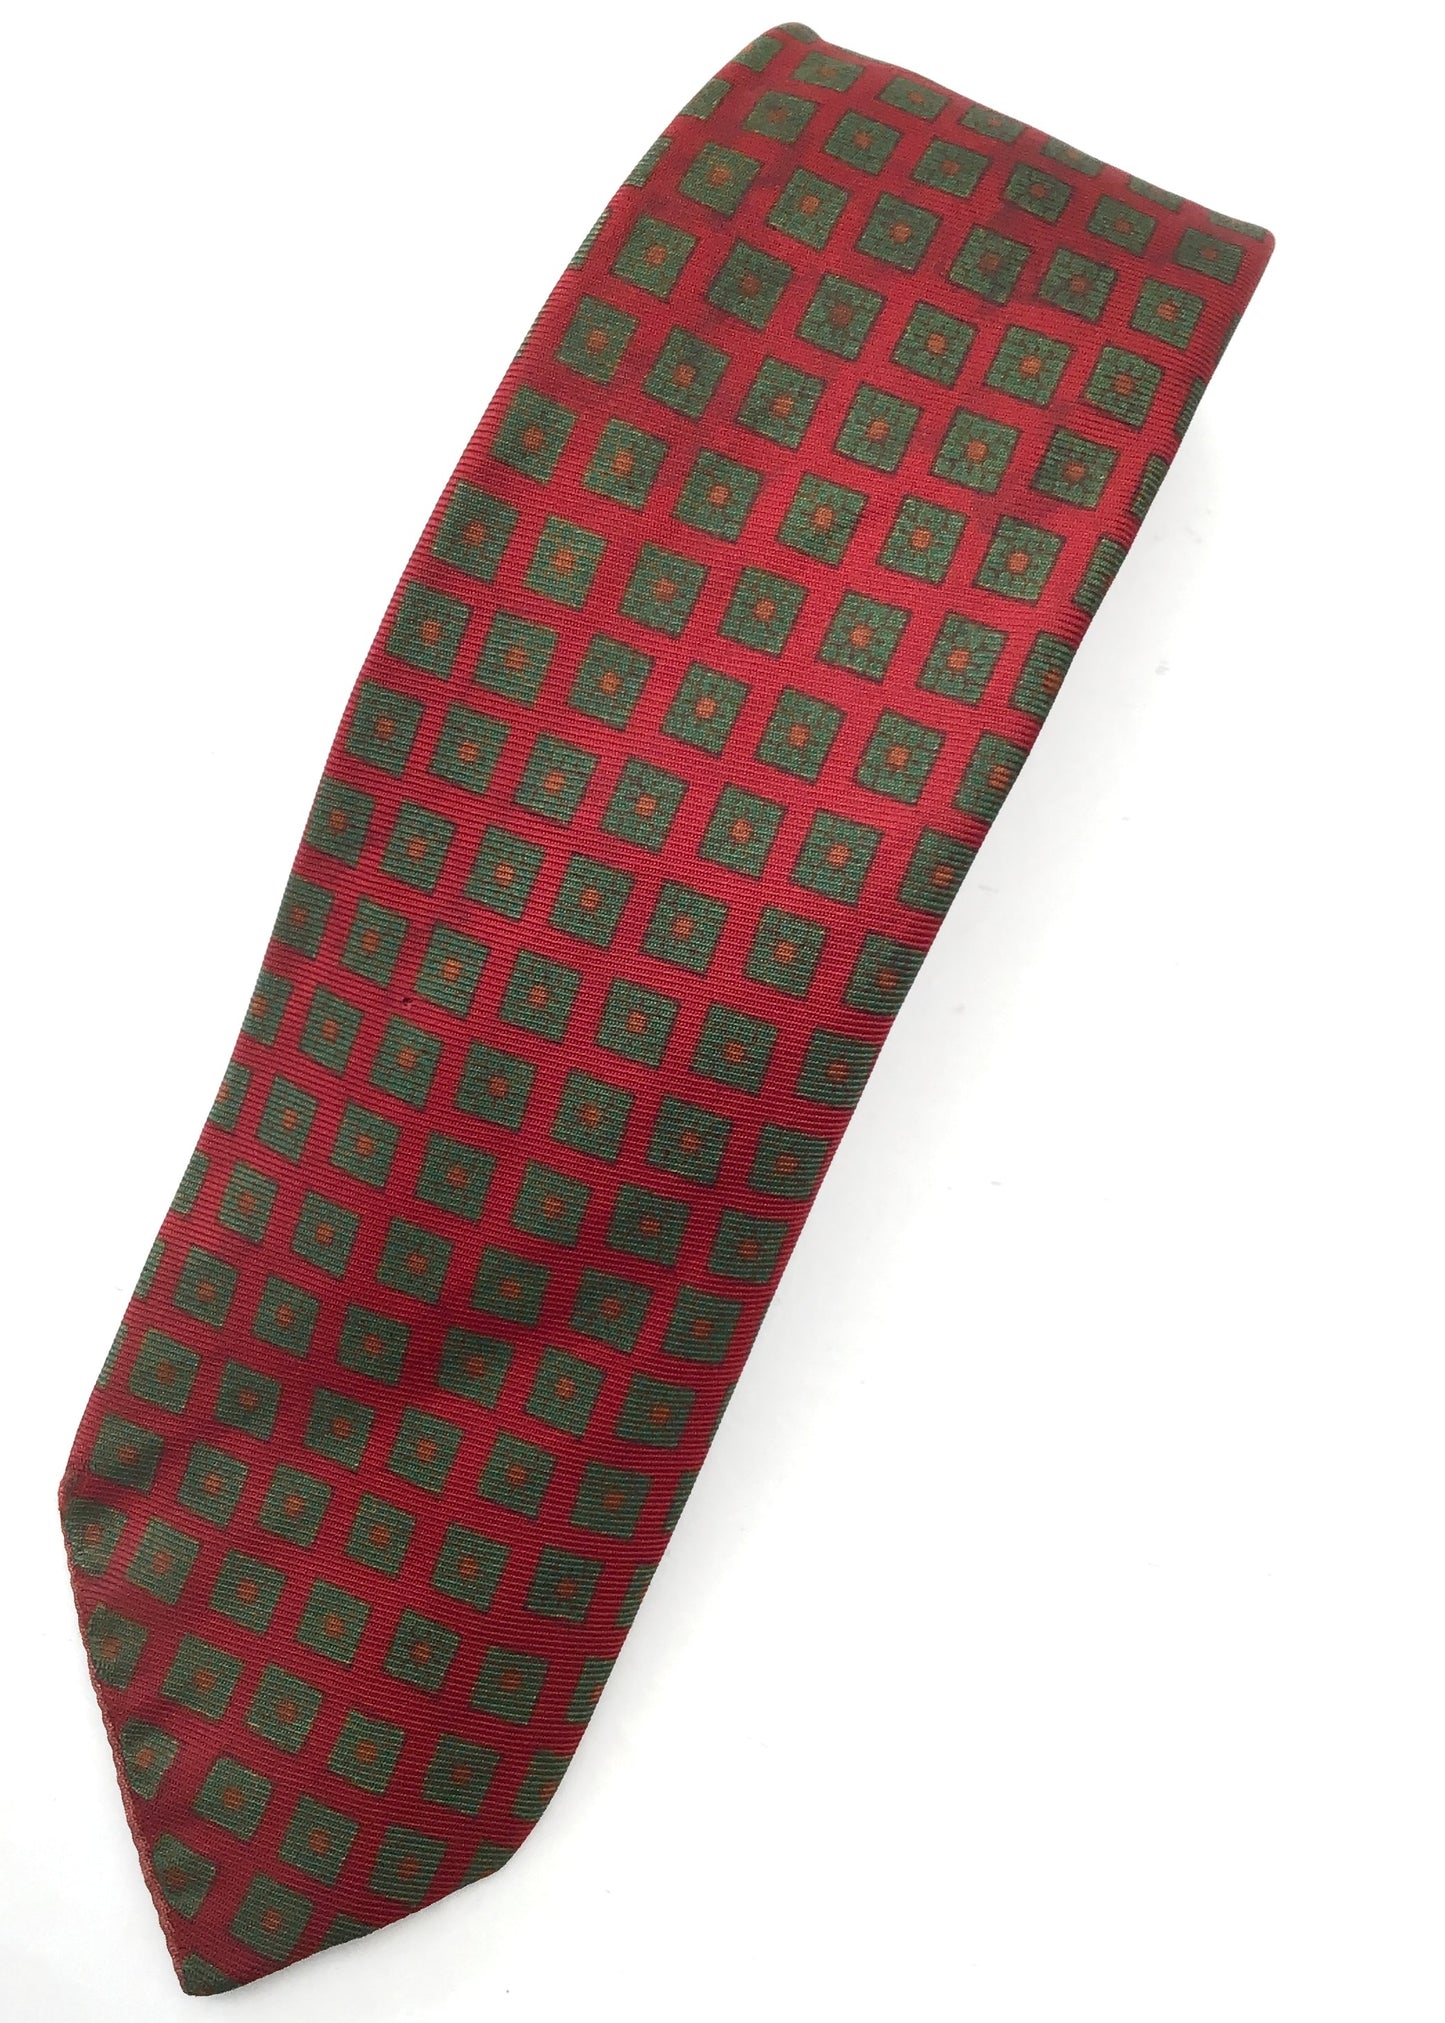 vintage 1960s John Comfort silk tie in a dark burgundy red with green squares pattern